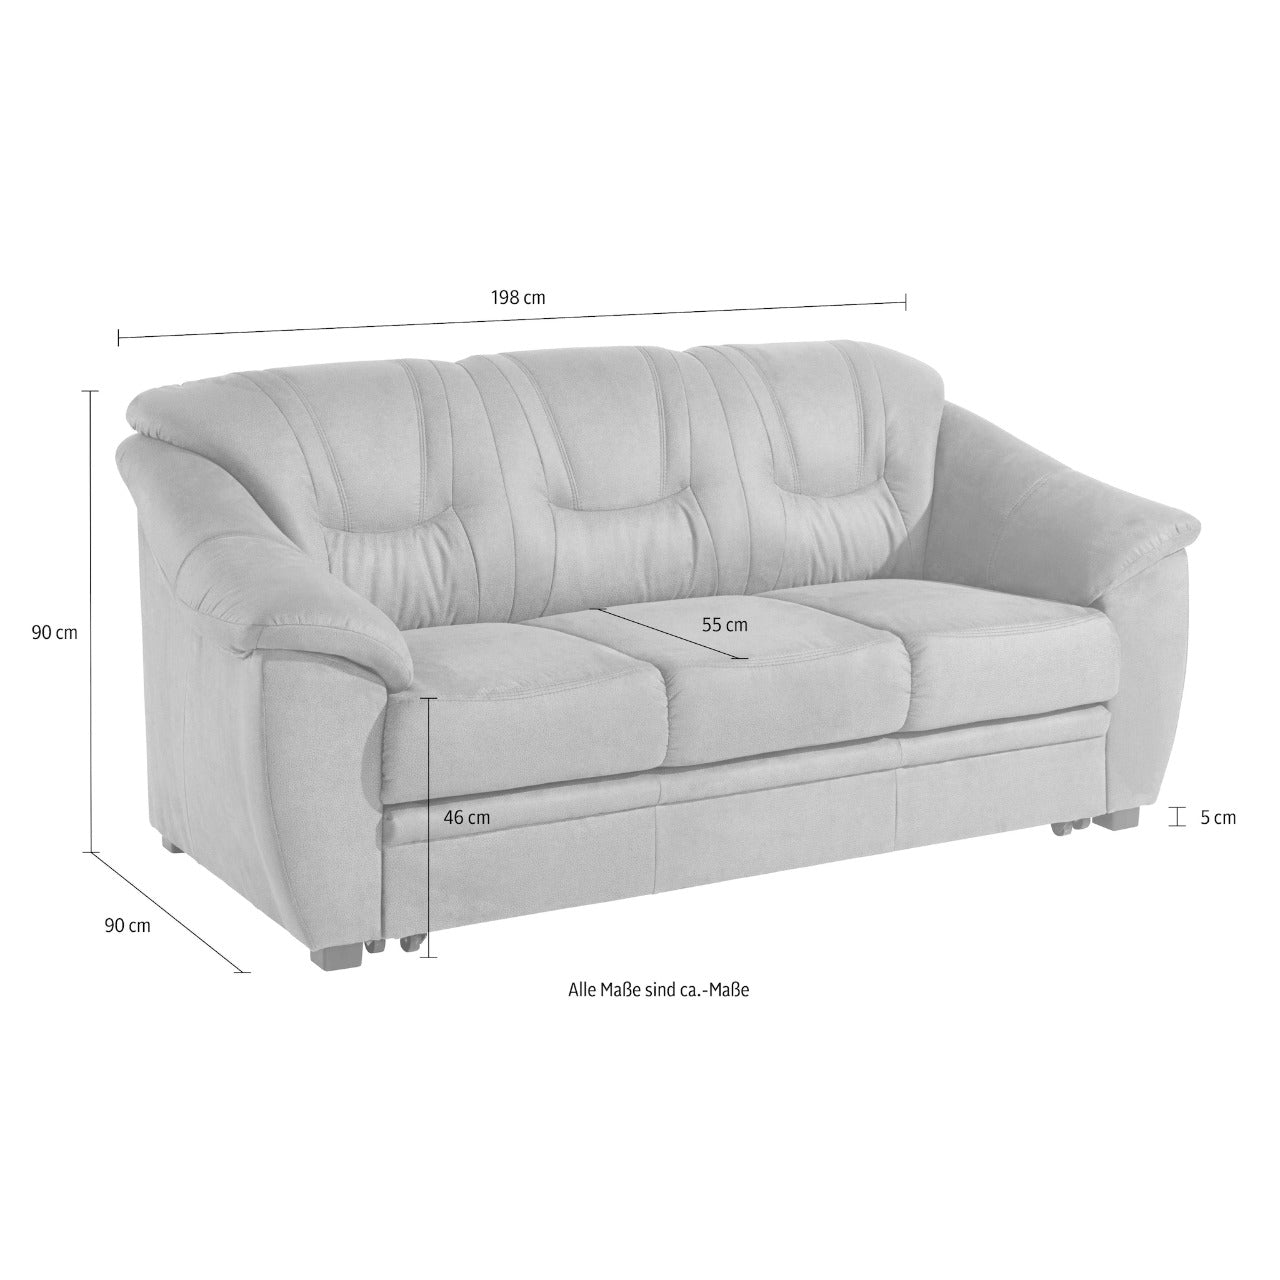 3 Seater Sofa Set:- Alden Fabric Office Sofa Set (Grey)